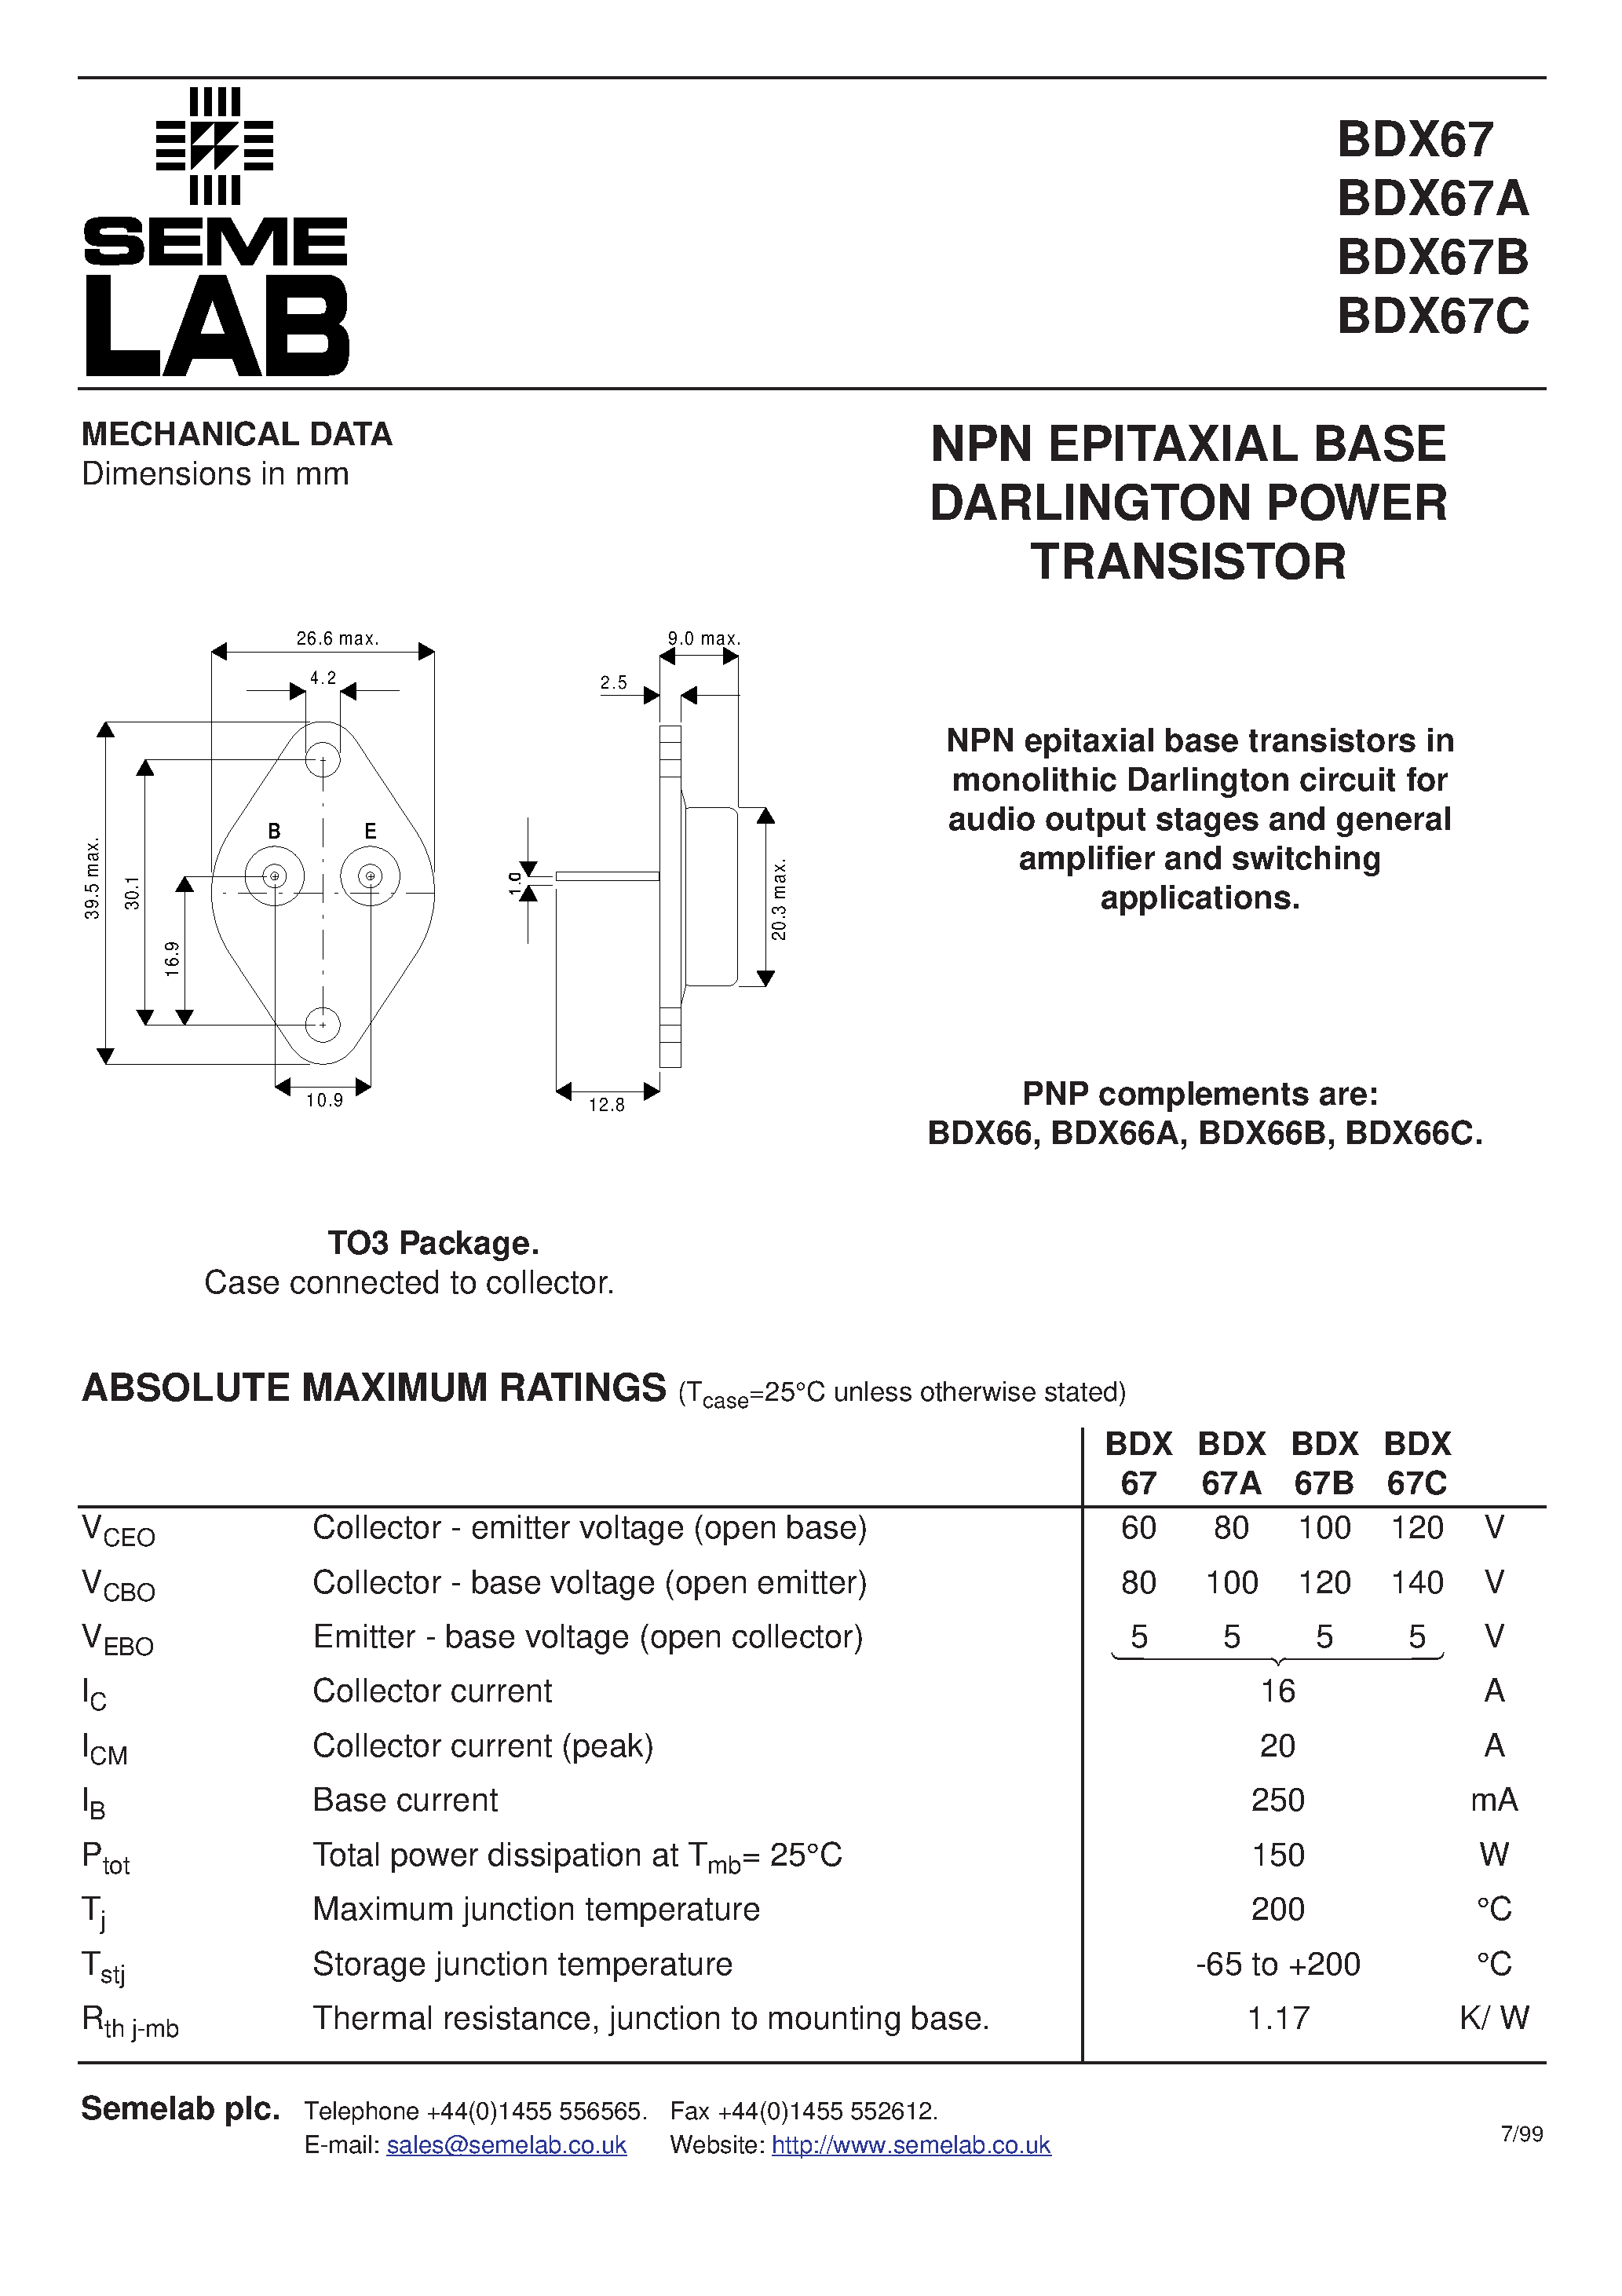 Datasheet BDX67B - NPN EPITAXIAL BASE DARLINGTON POWER TRANSISTOR page 1